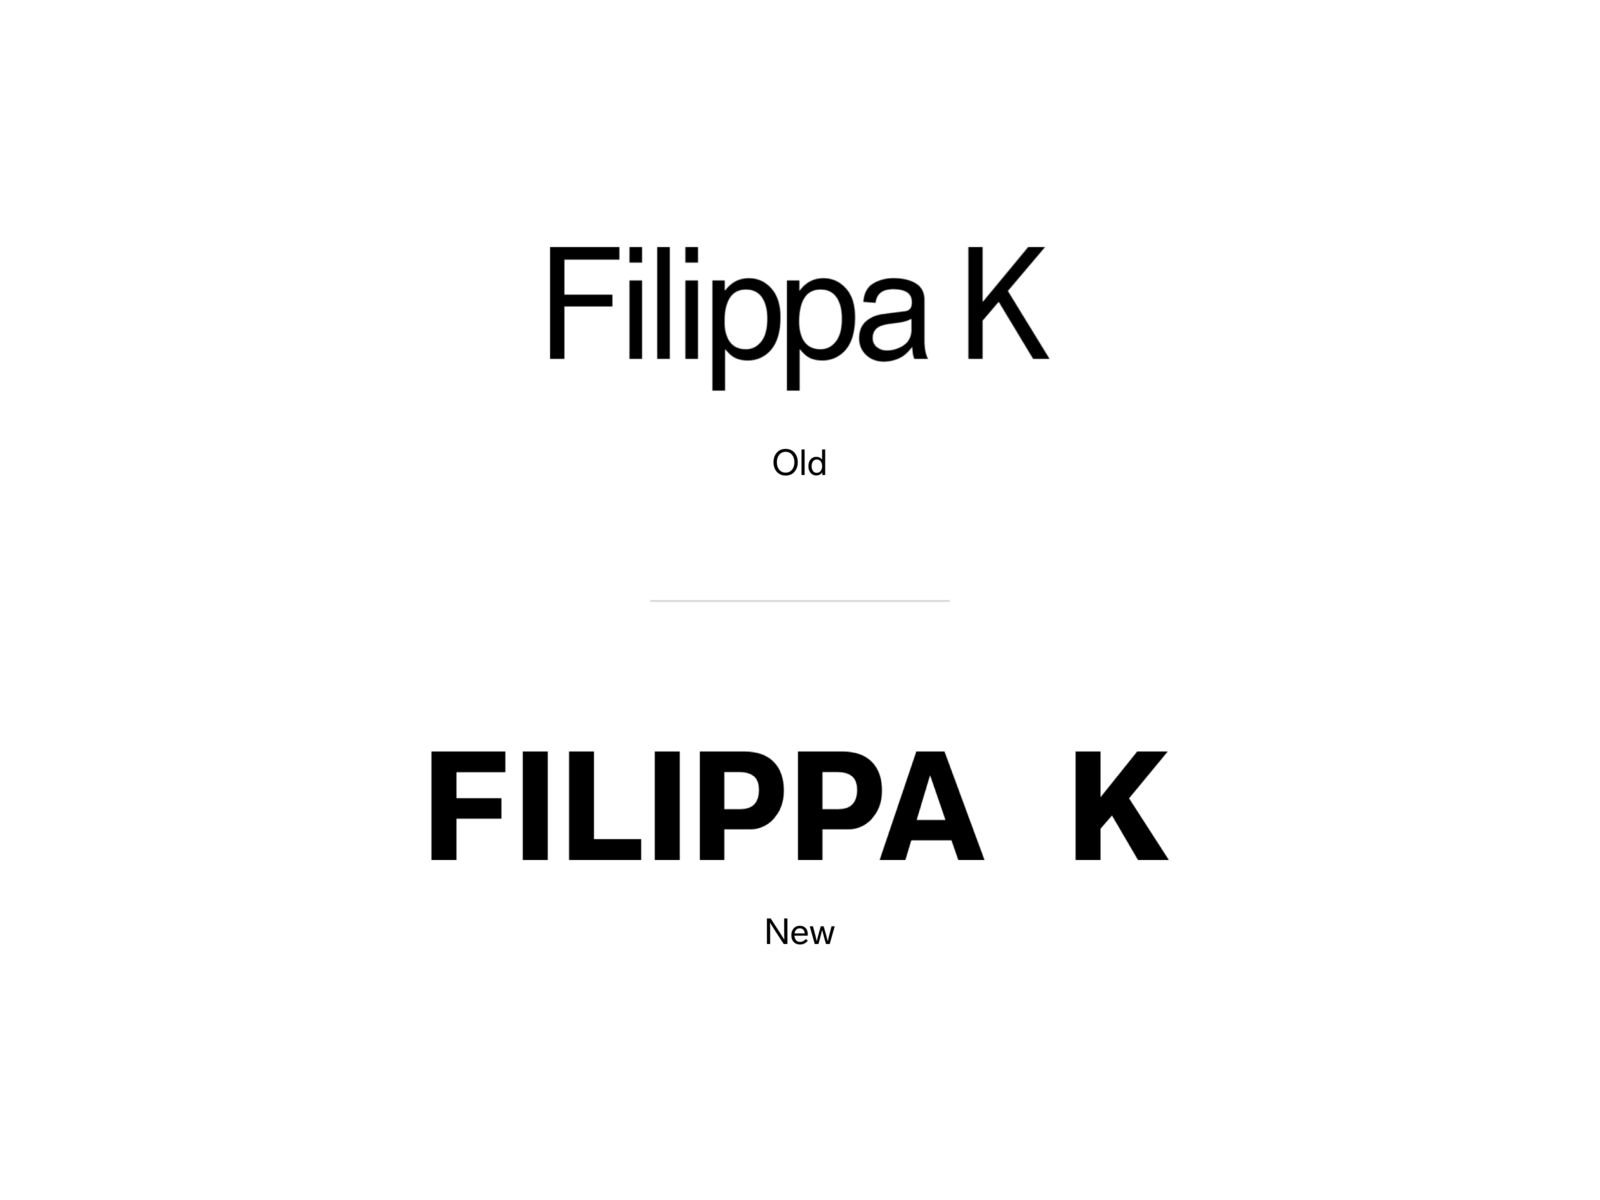 Filippa K focussing on “fewer but better” for AW21